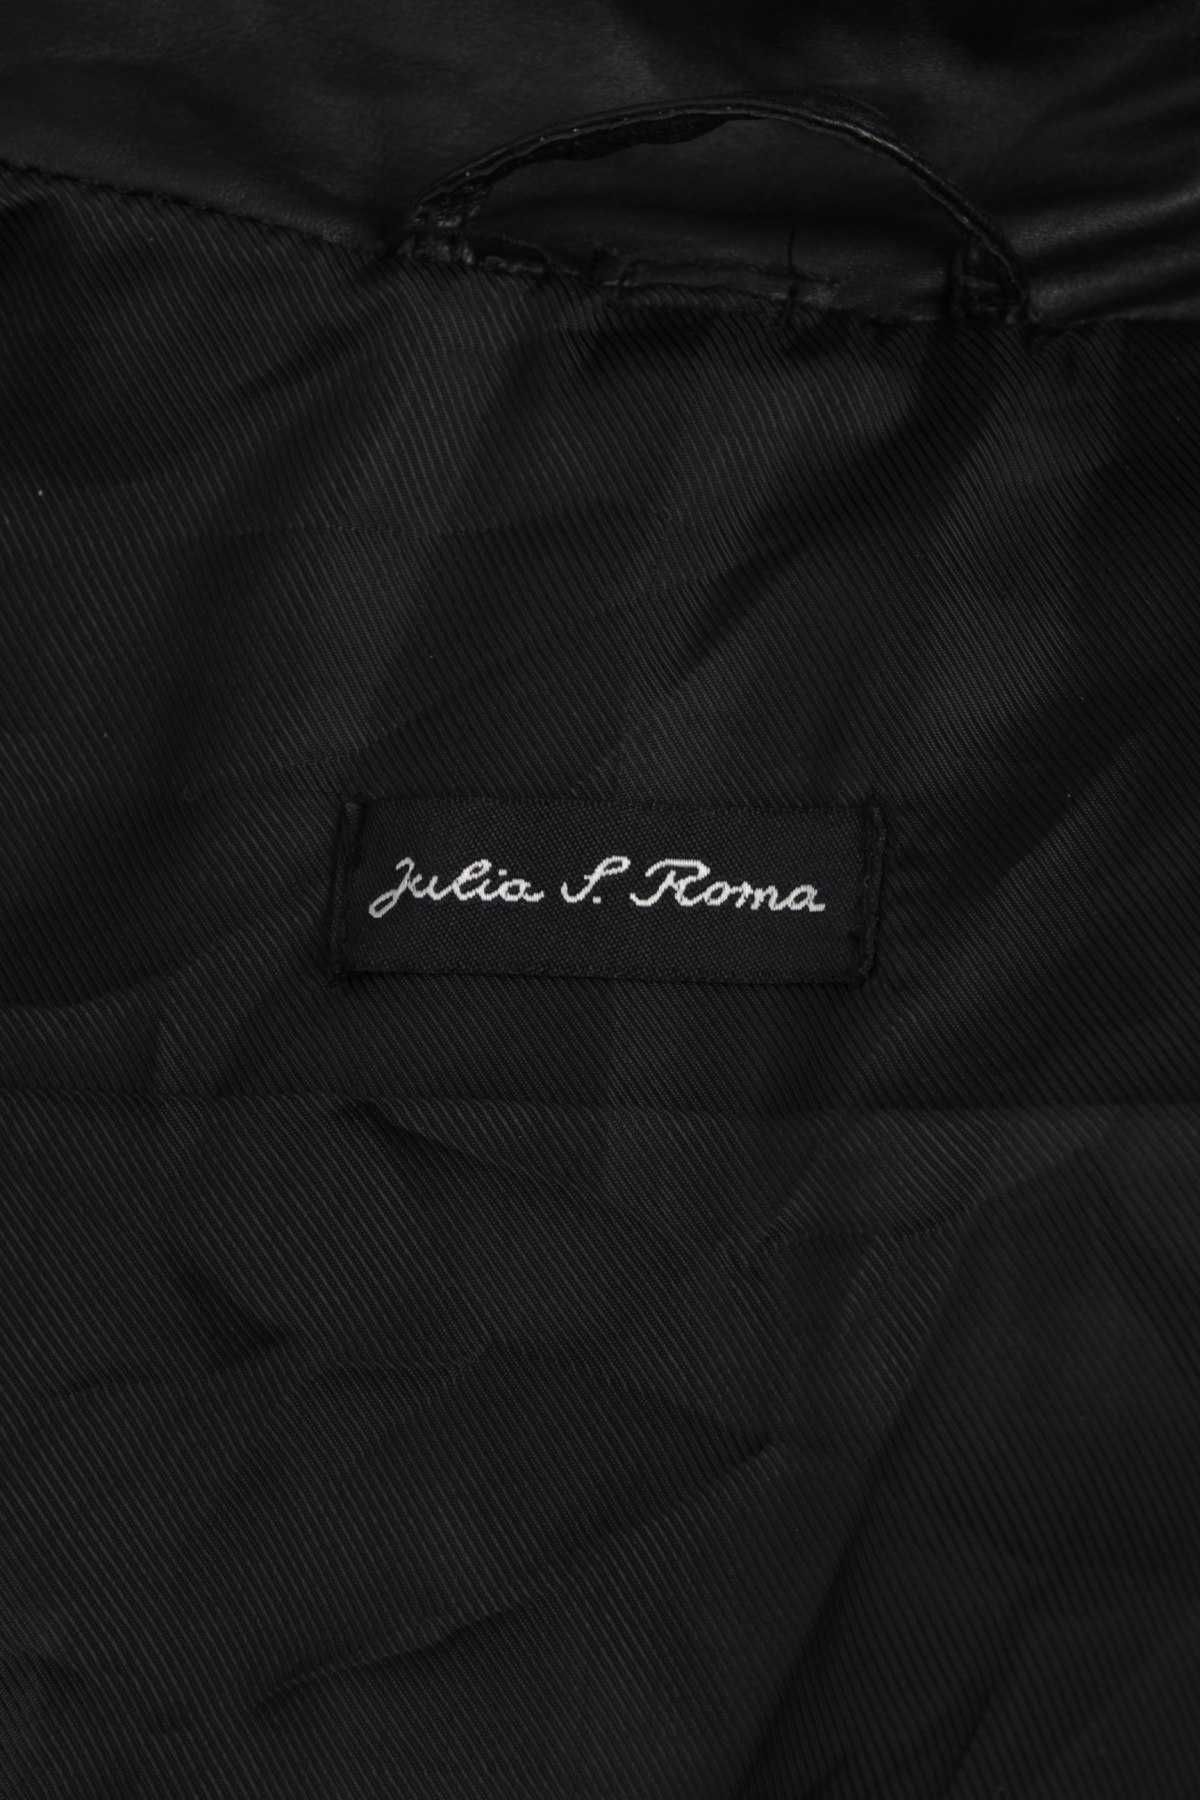 Дамско кожено манто Julia S Roma - черно, естествена кожа